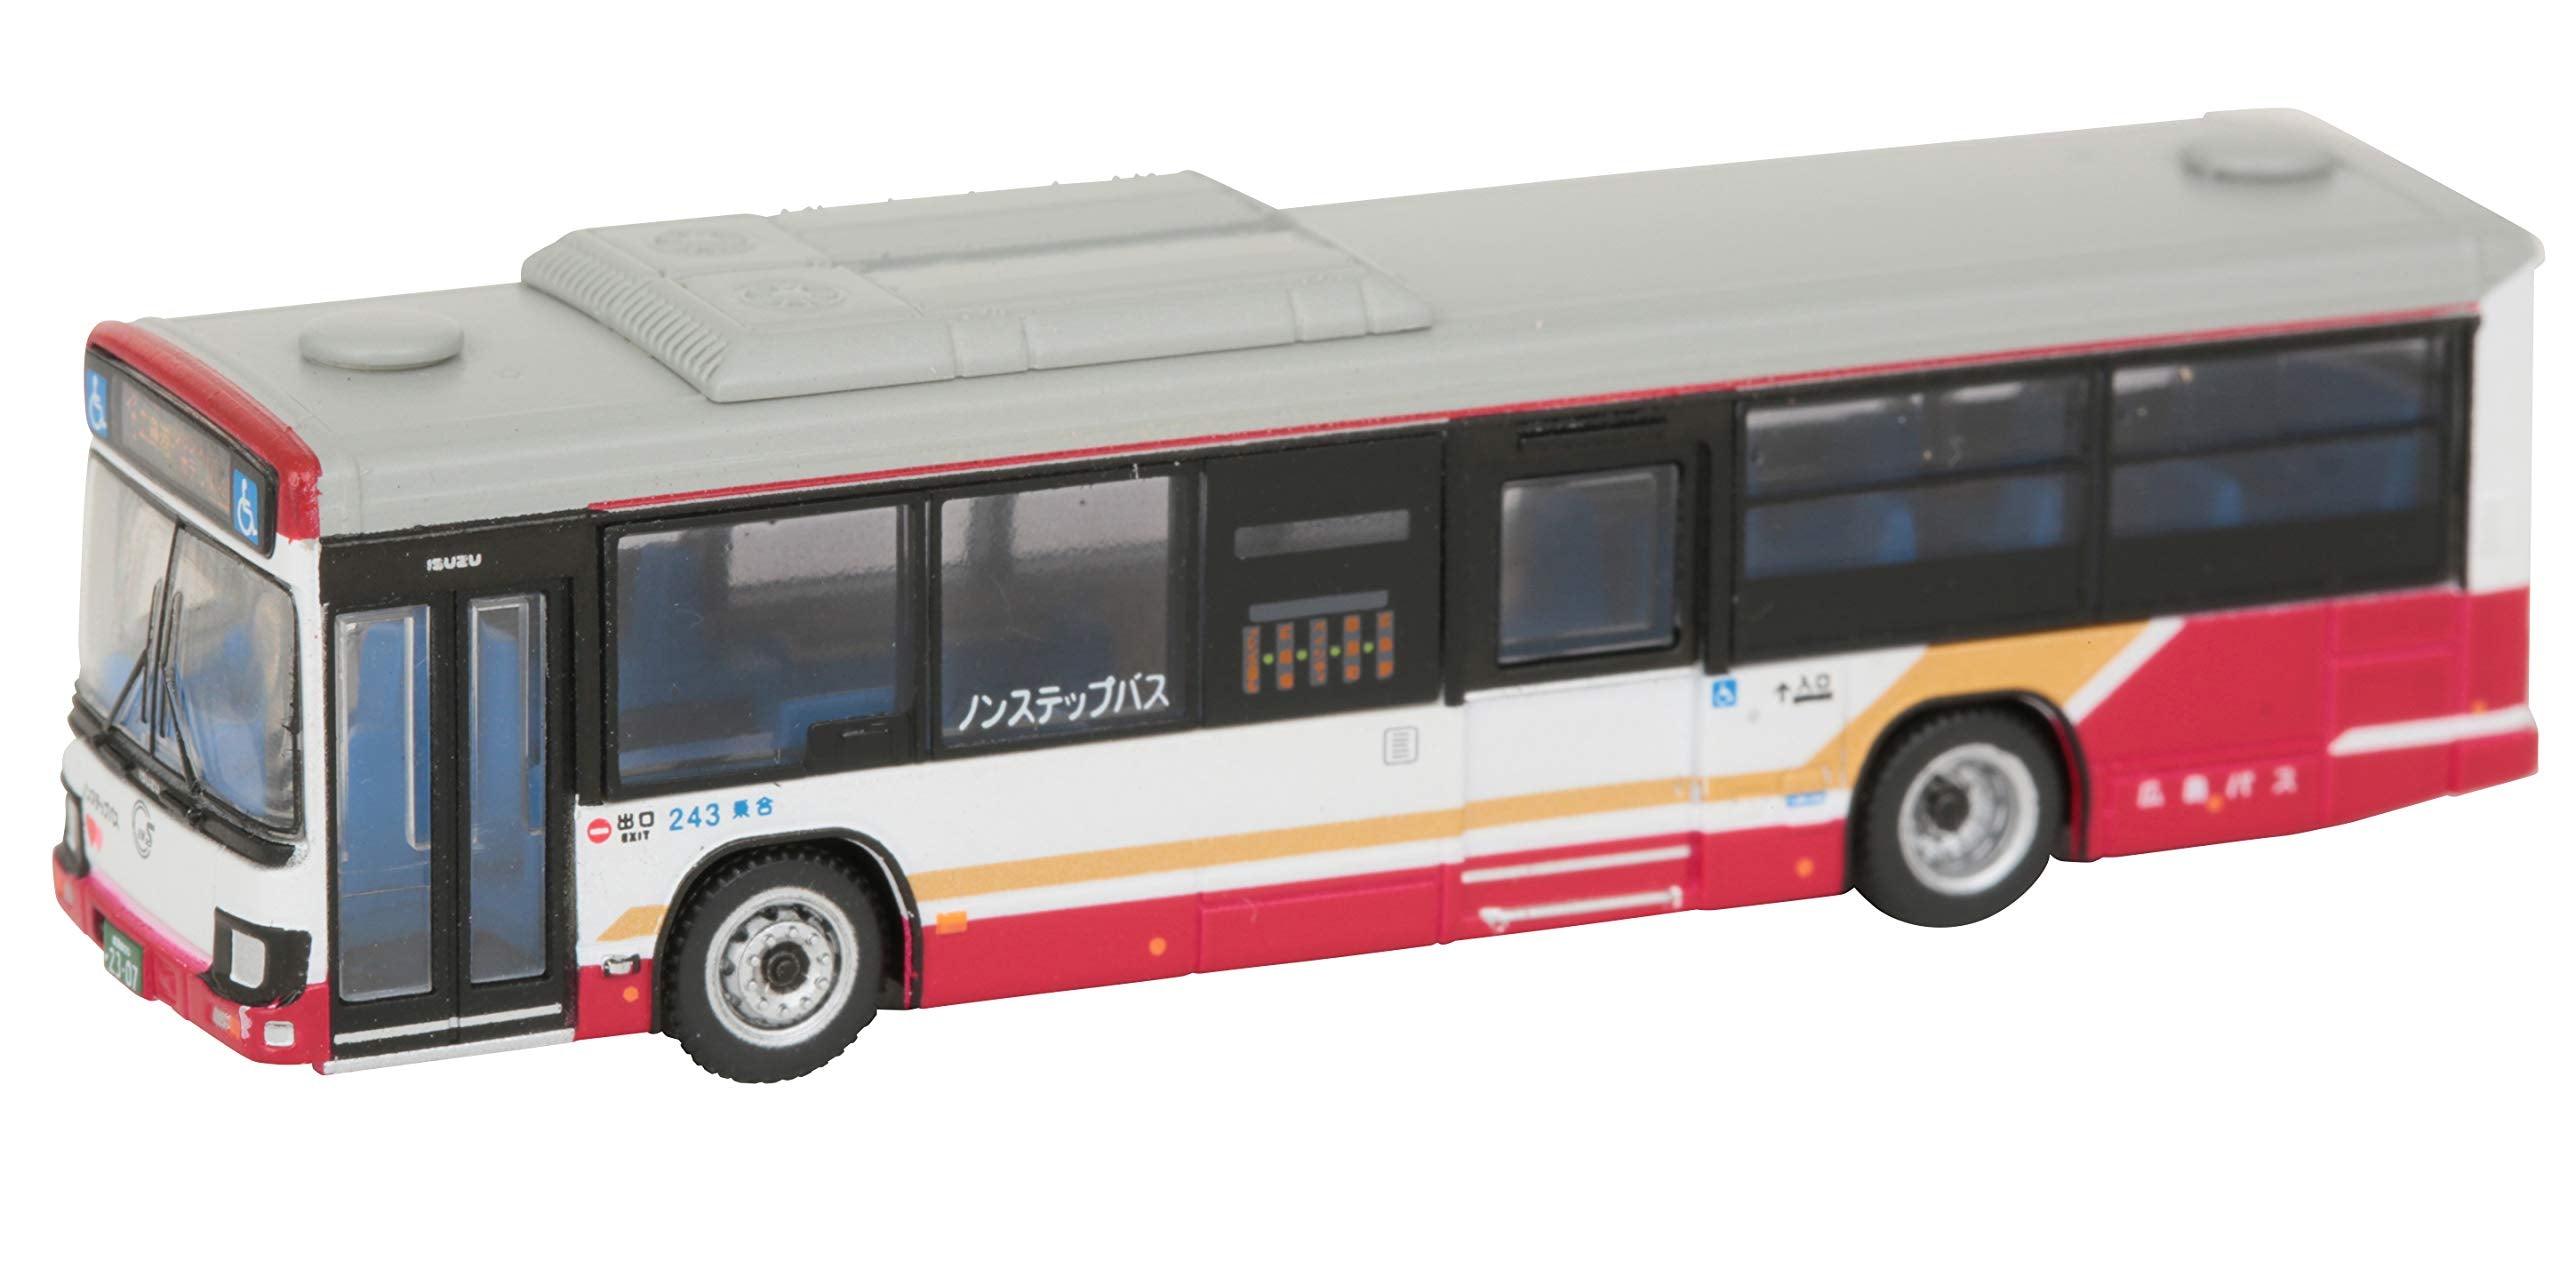 Tomytec National Bus Collection Jb072 - Hiroshima Isuzu Elga Diorama Limited Production